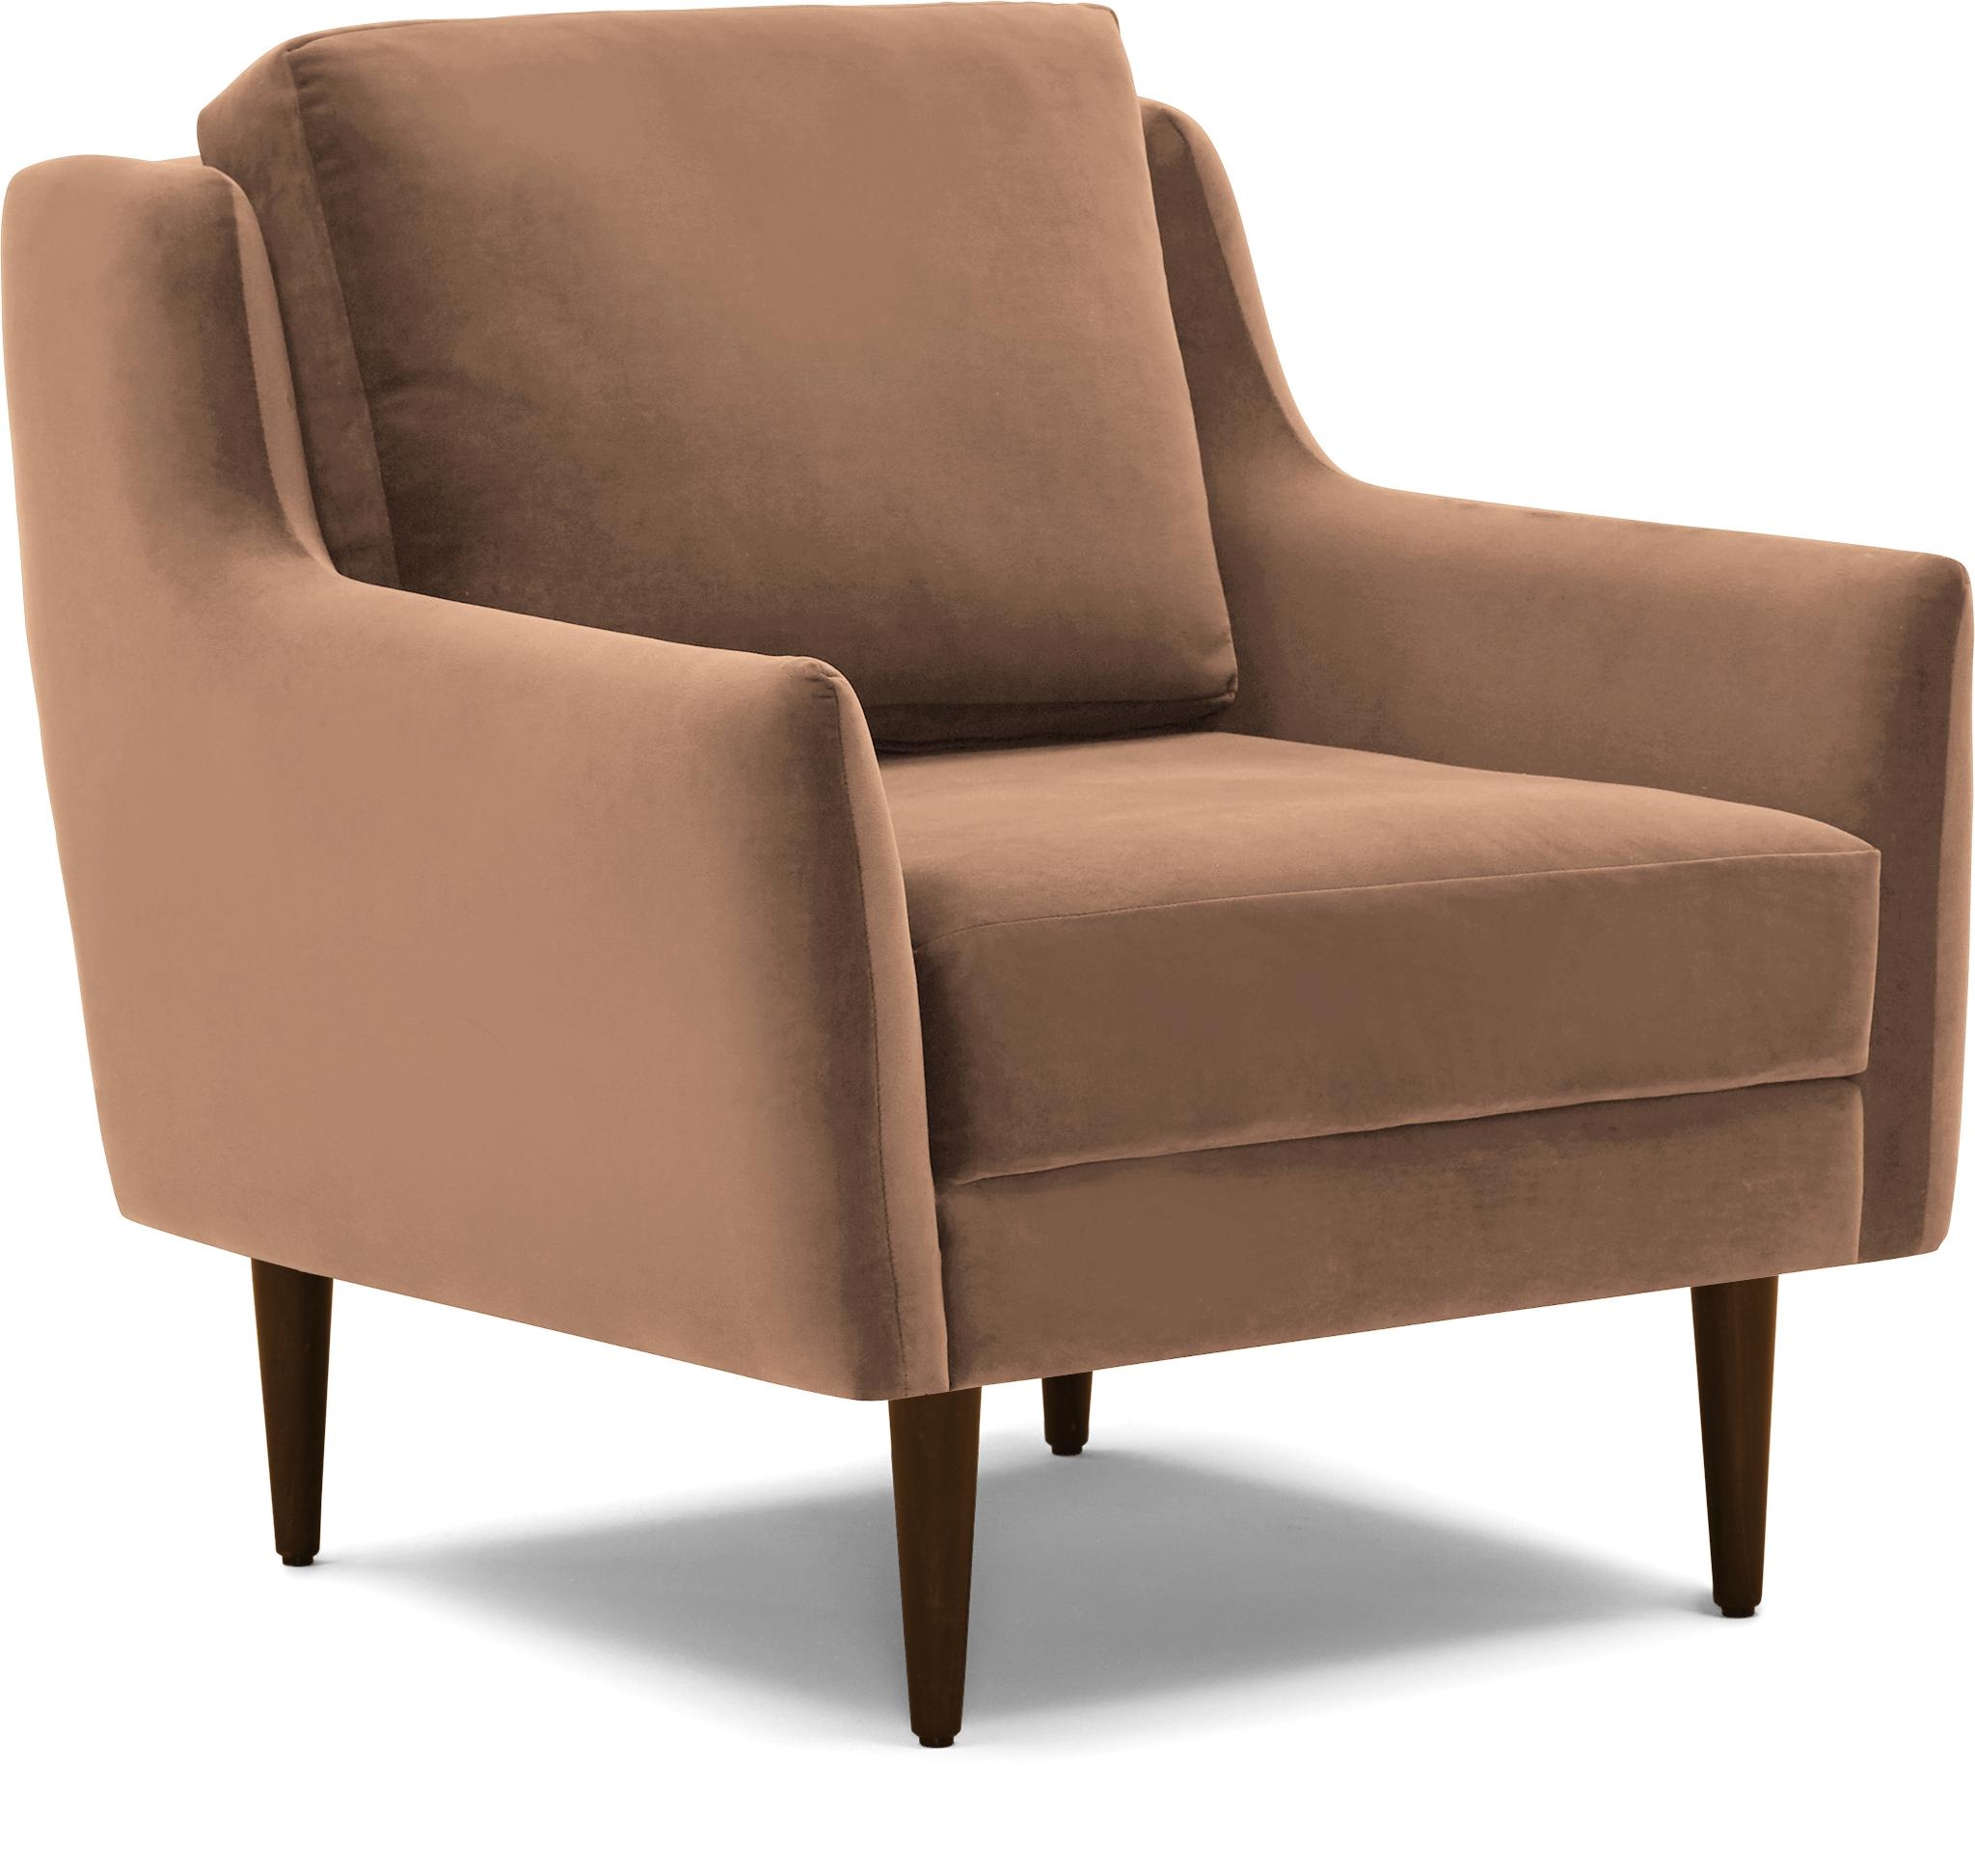 Pink Bell Mid Century Modern Chair - Royale Blush - Mocha - Image 1